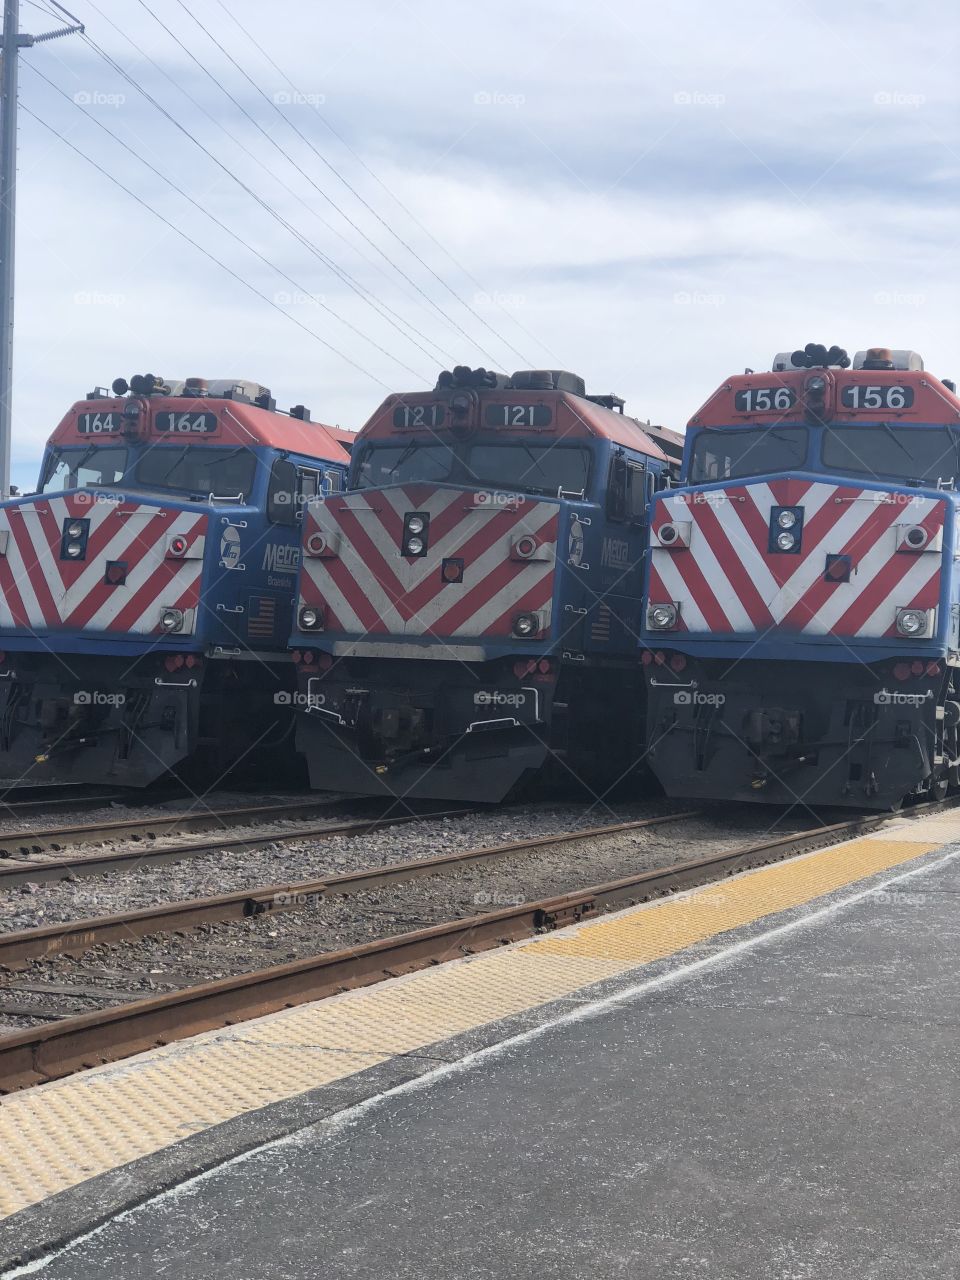 One, Two, Three Metra Trains.